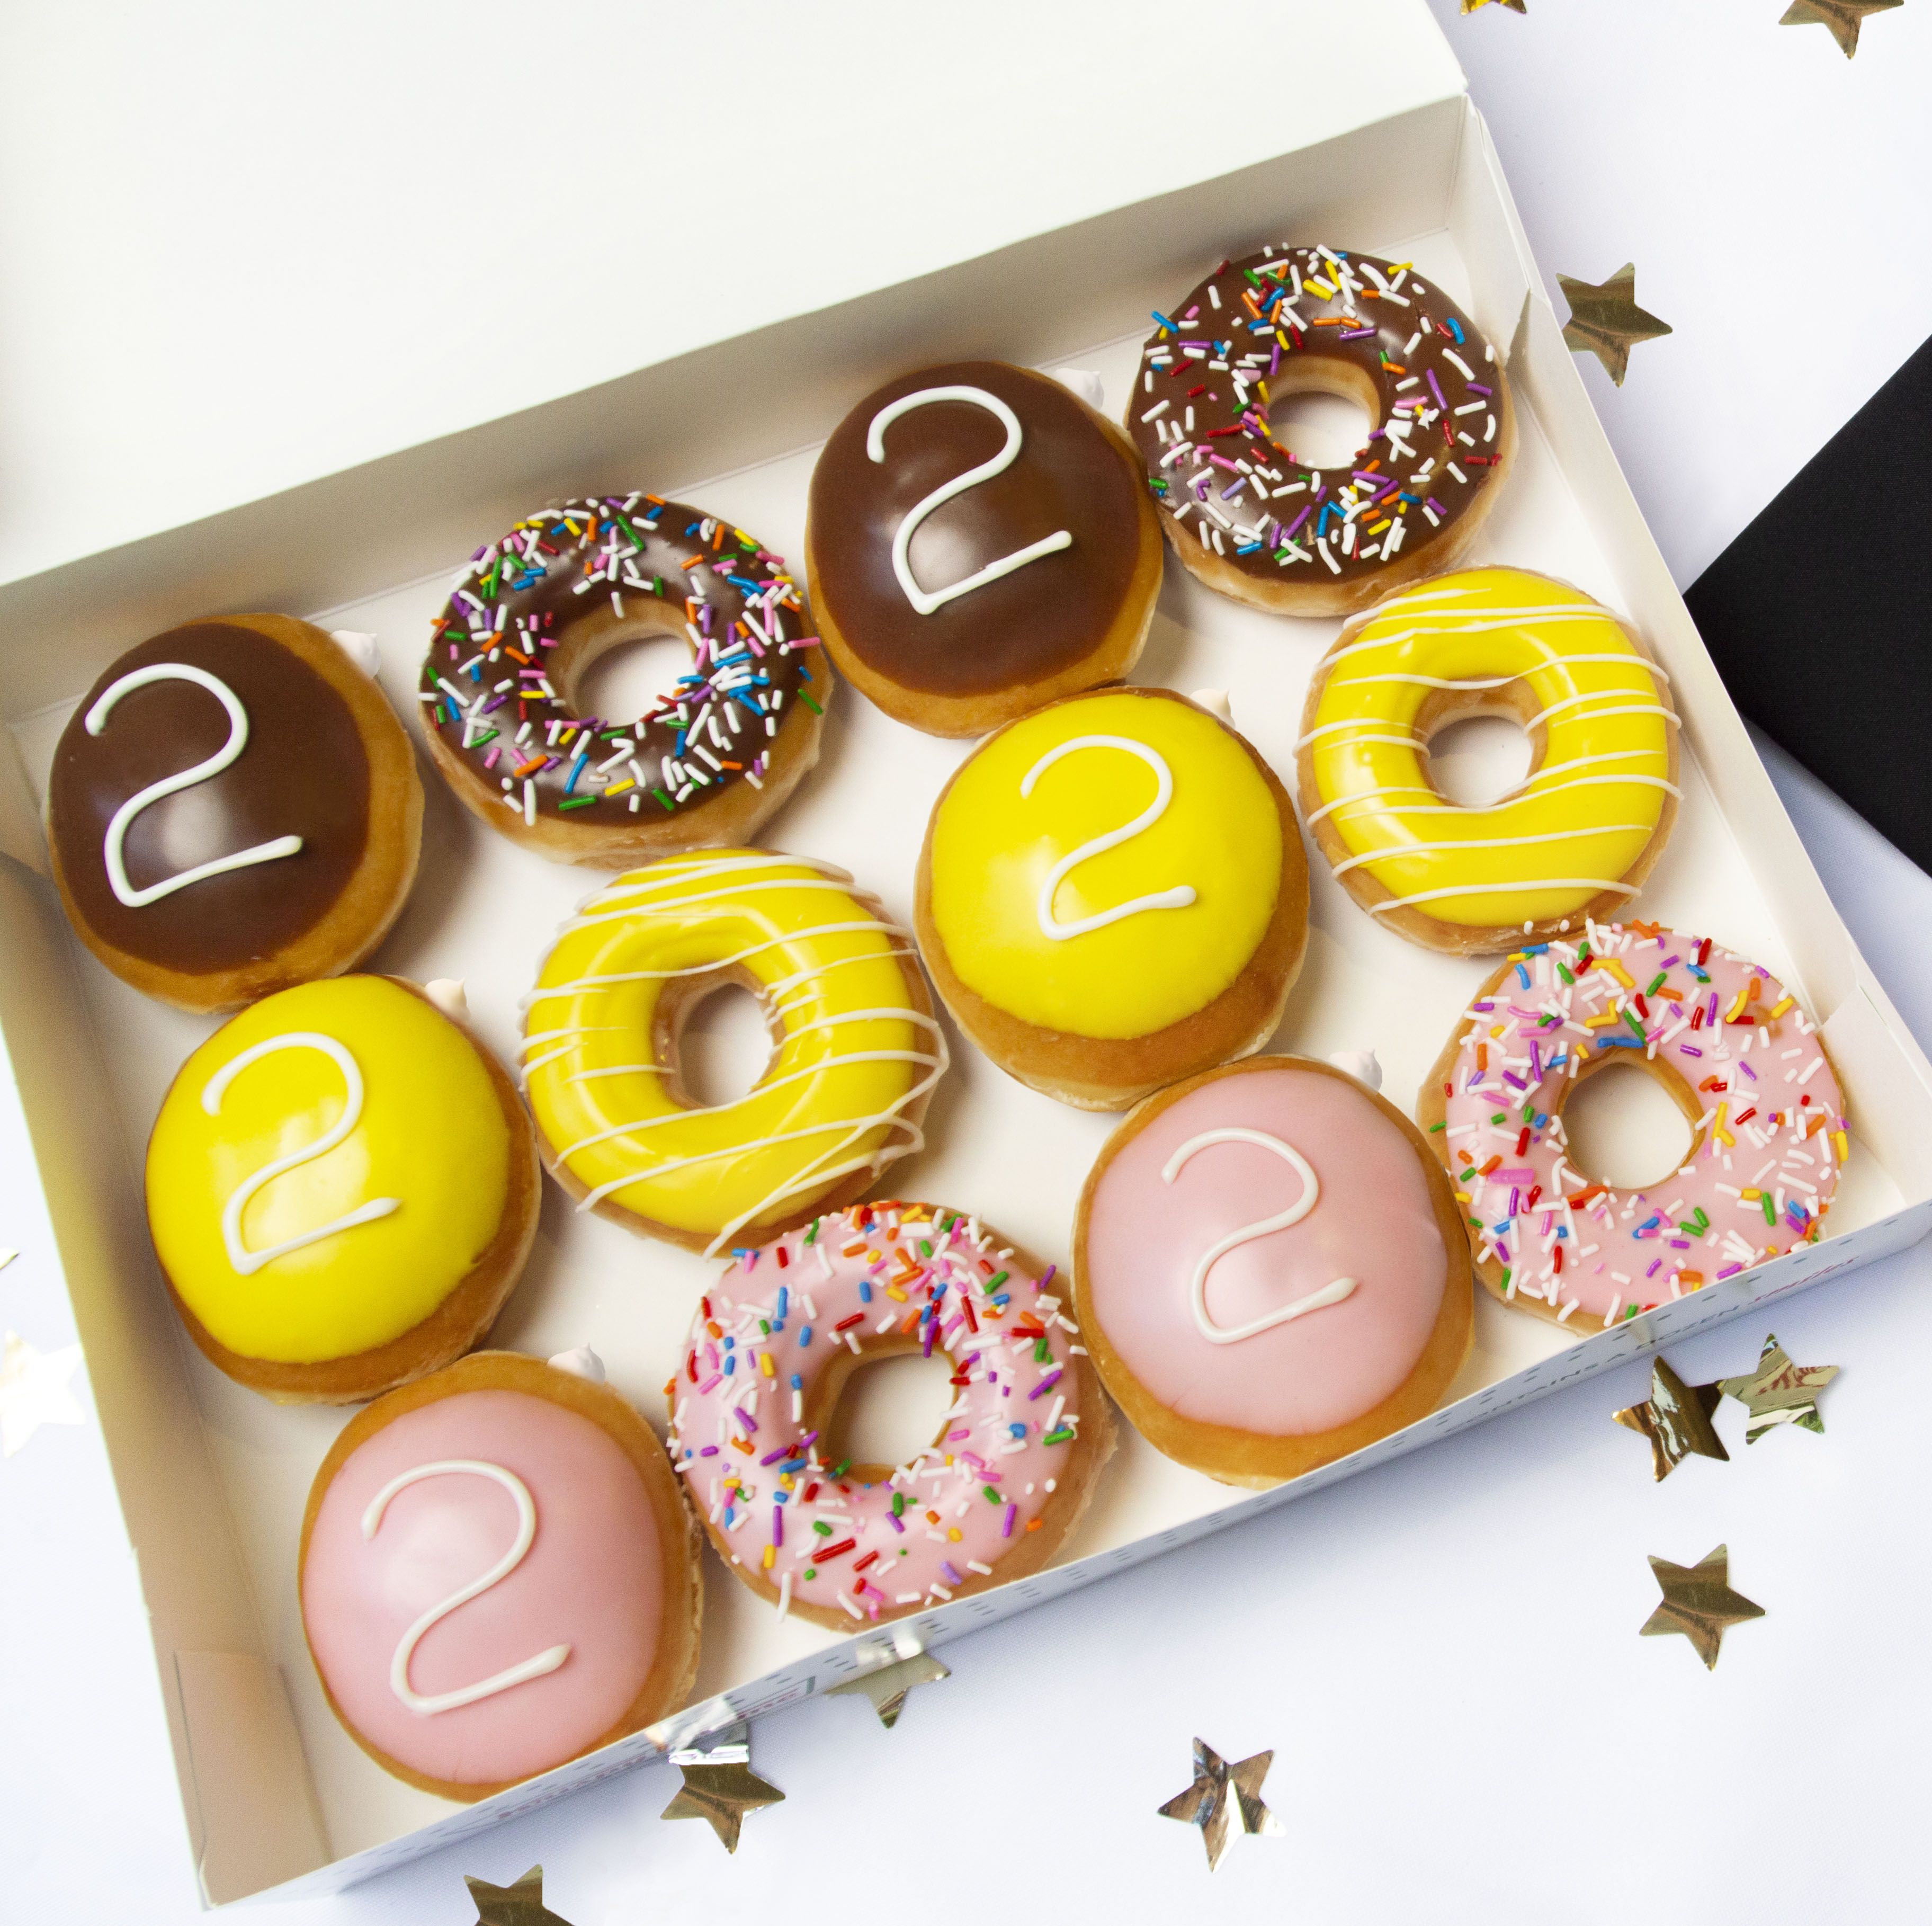 Krispy Kreme Is Giving 2020 Grads A Dozen Free Donuts This Weekend